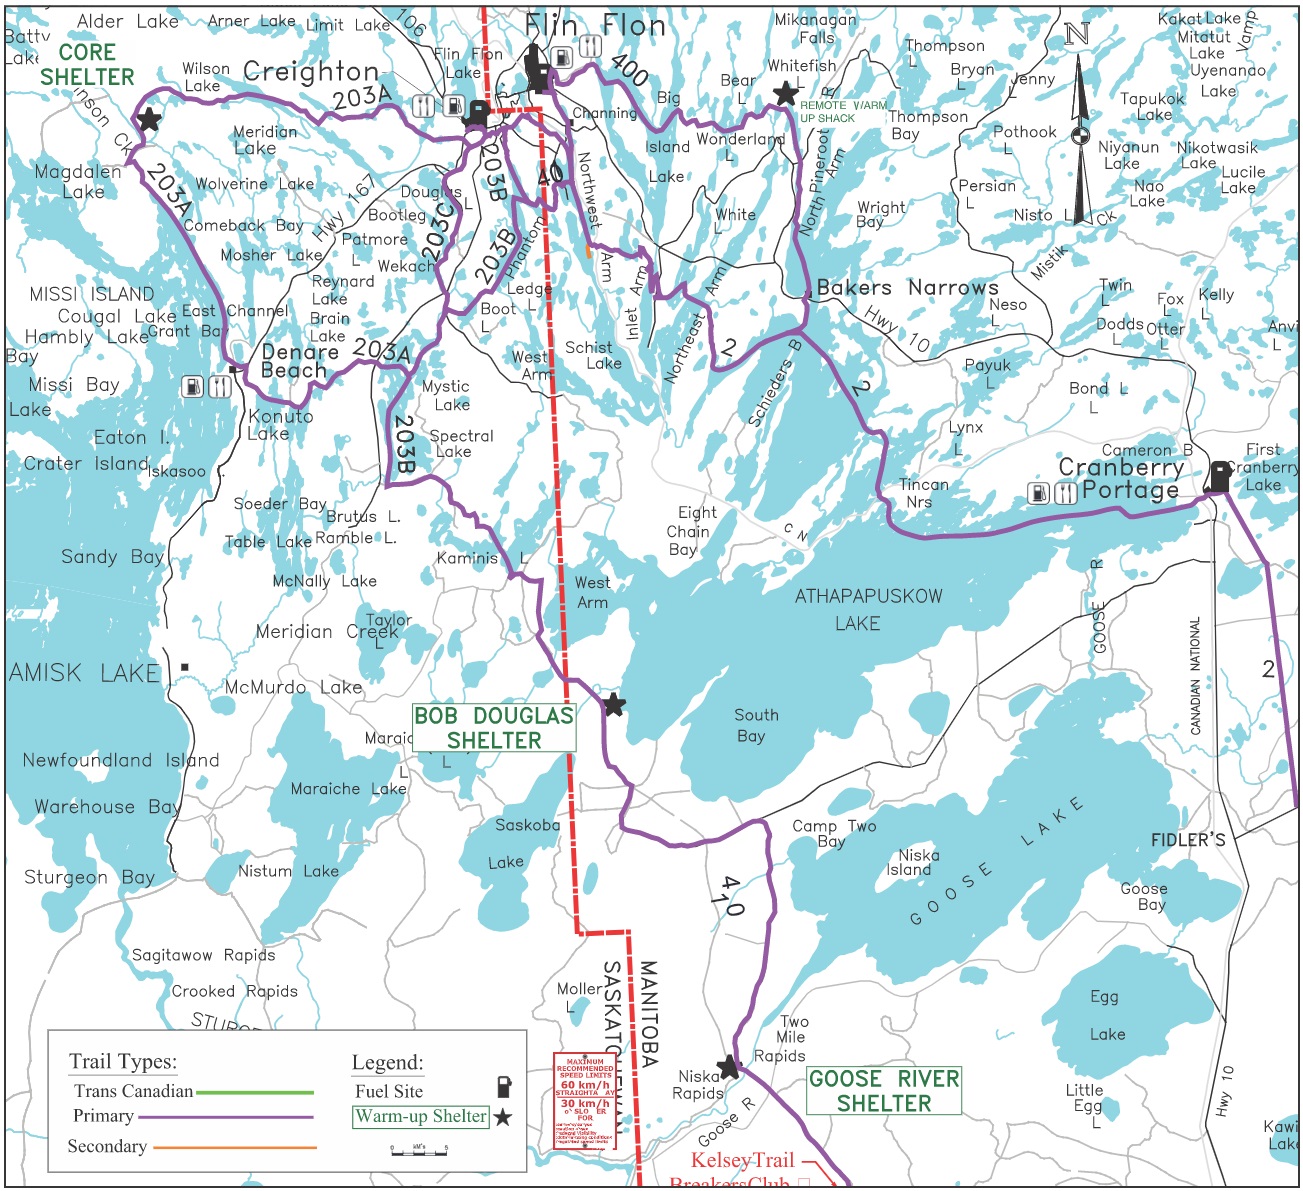 Greater Flin Flon area trail map.